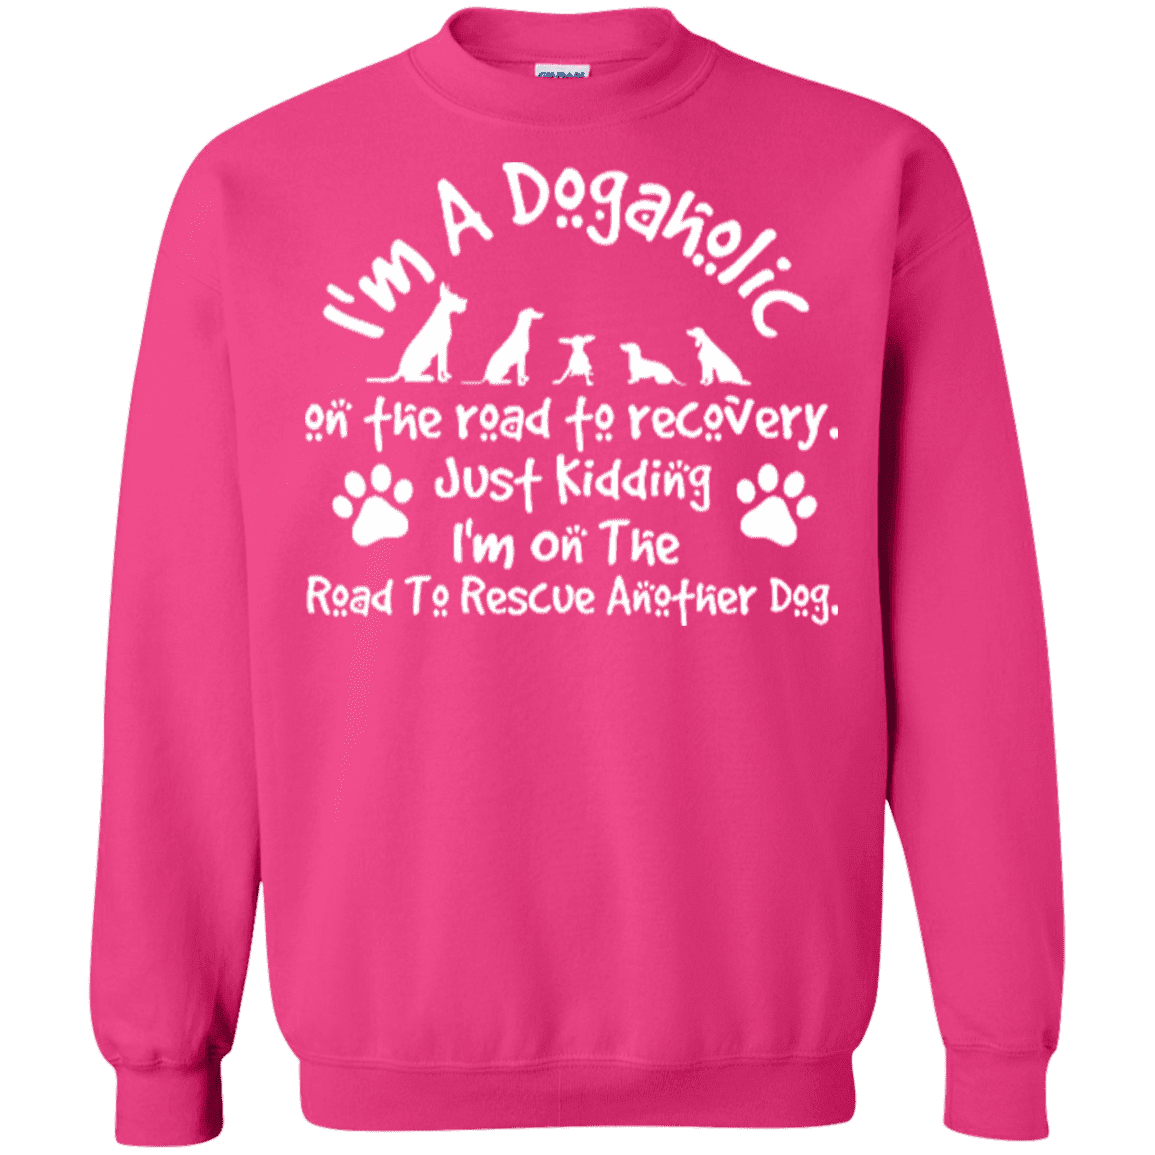 I'm a Dogaholic - Sweatshirt.